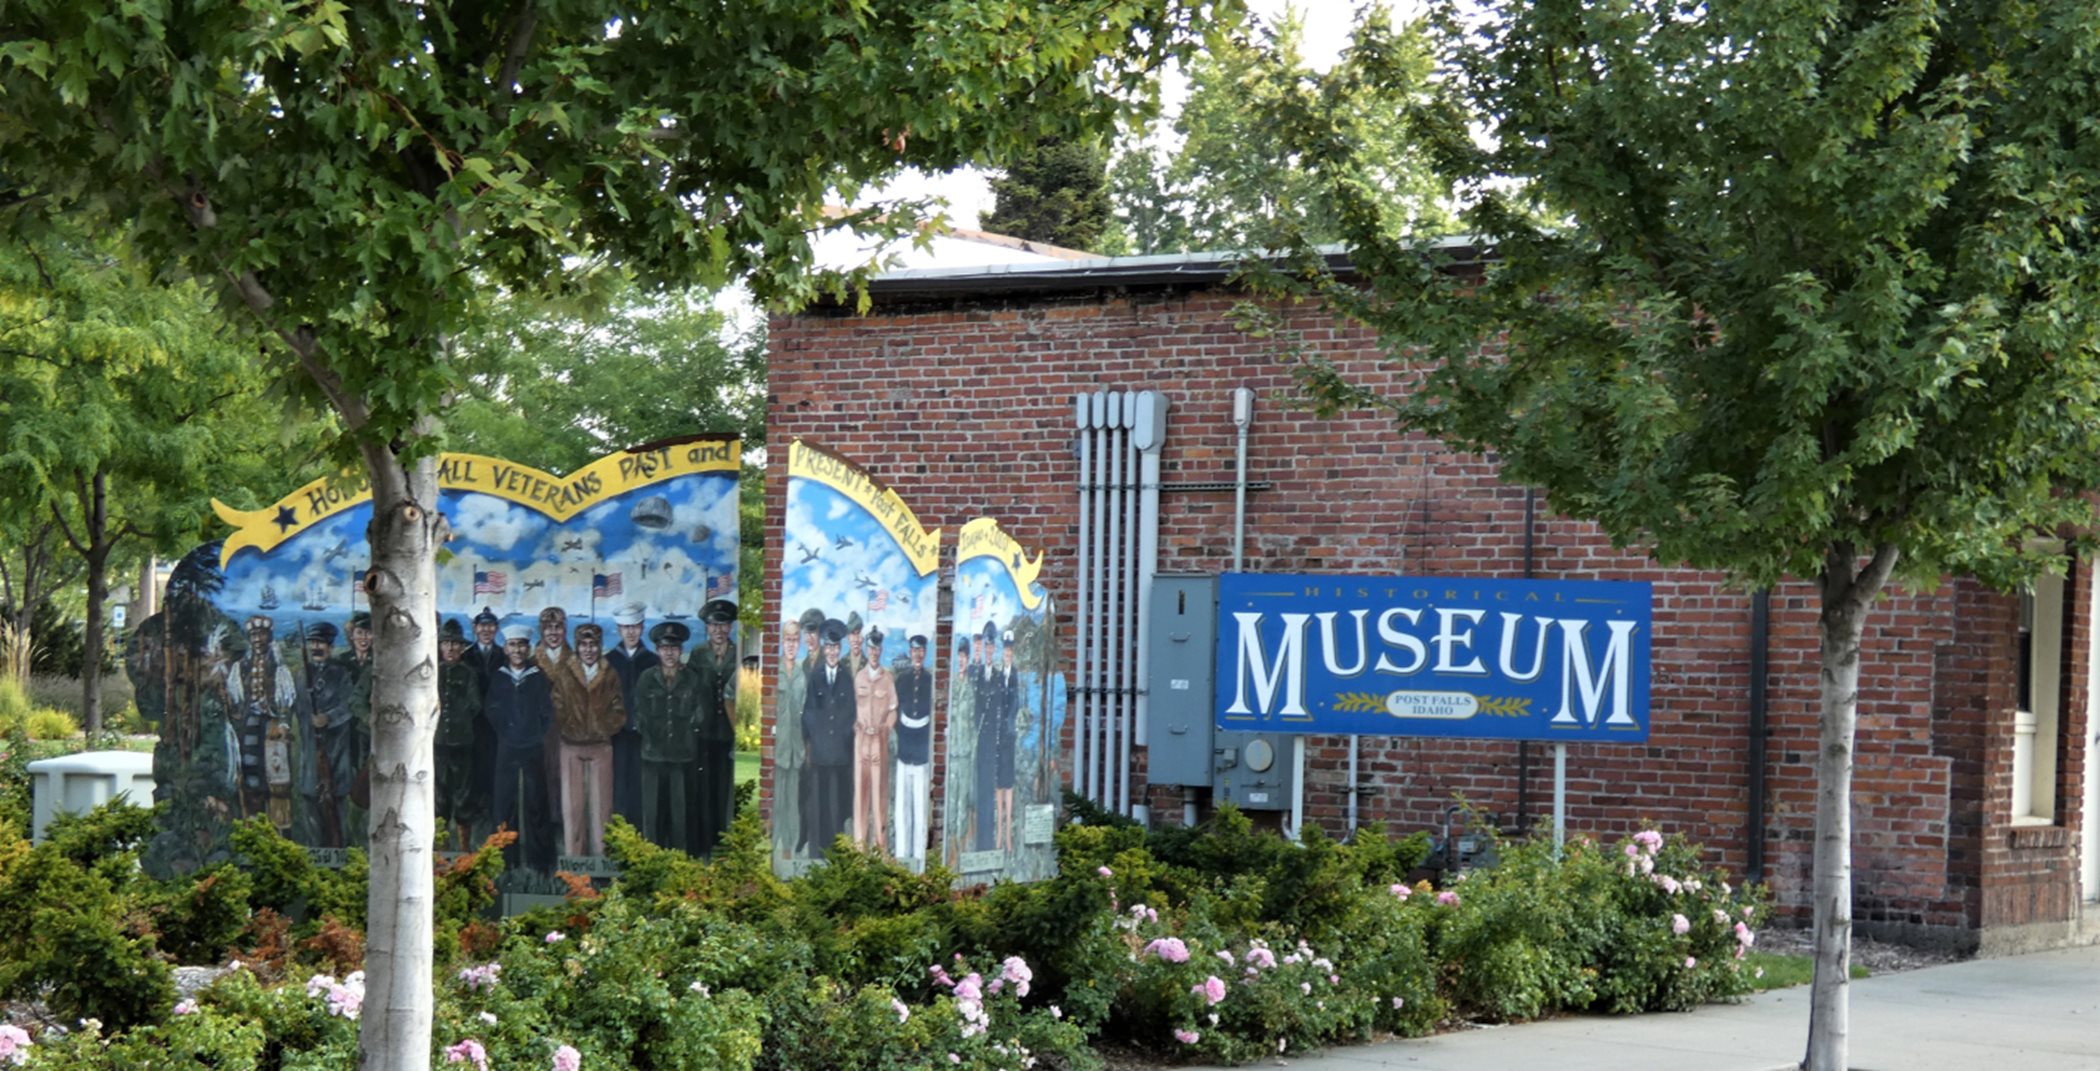 Post Falls Museum entrance sign